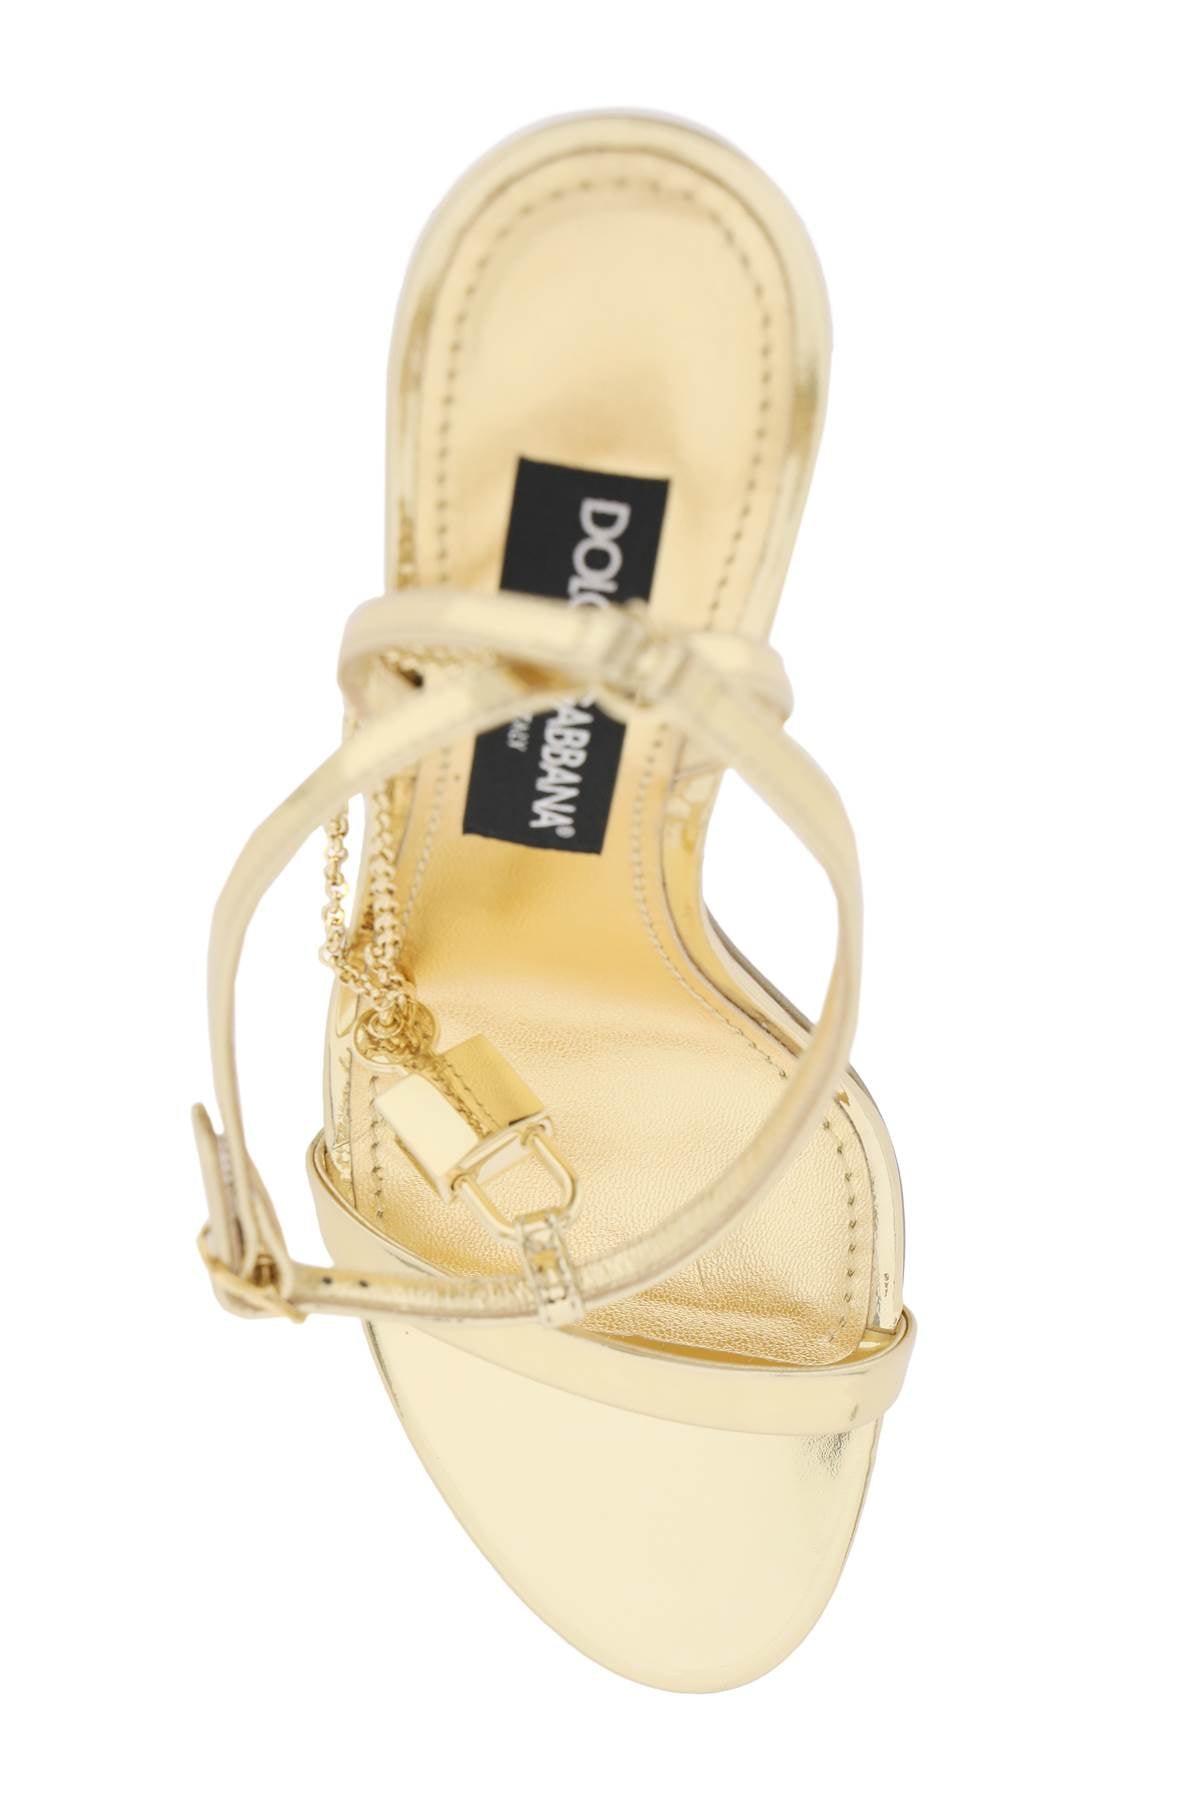 Dolce & Gabbana Dolce & gabbana laminated leather sandals with charm